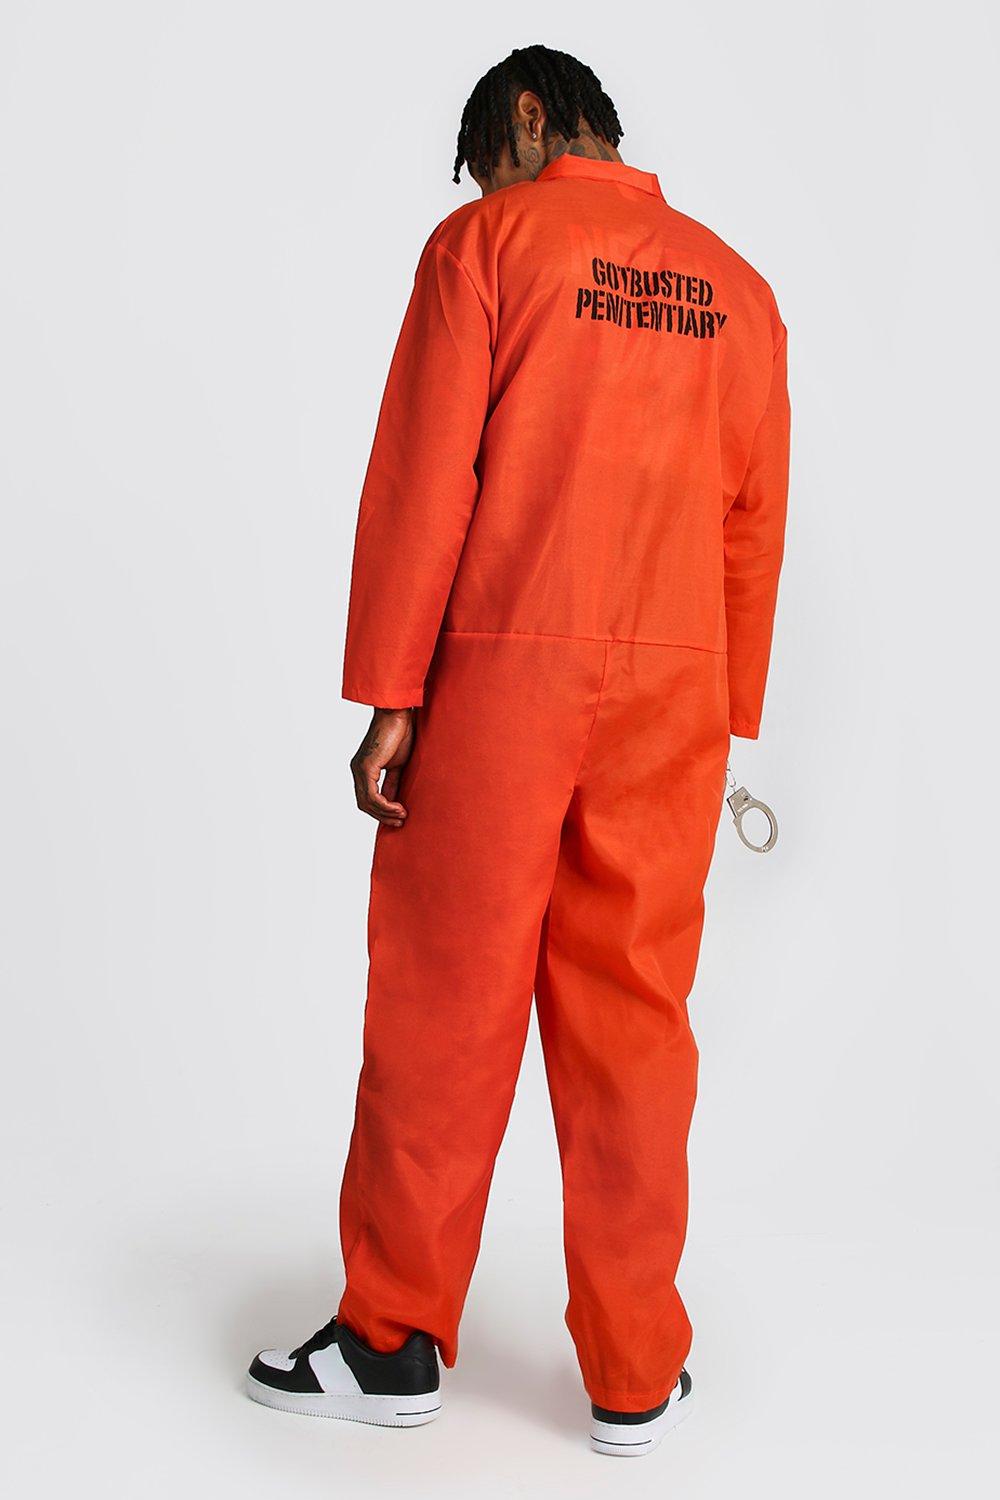 https://media.boohoo.com/i/boohoo/mzz12781_orange_xl_1/male-orange-halloween-prisoner-orange-overall-costume